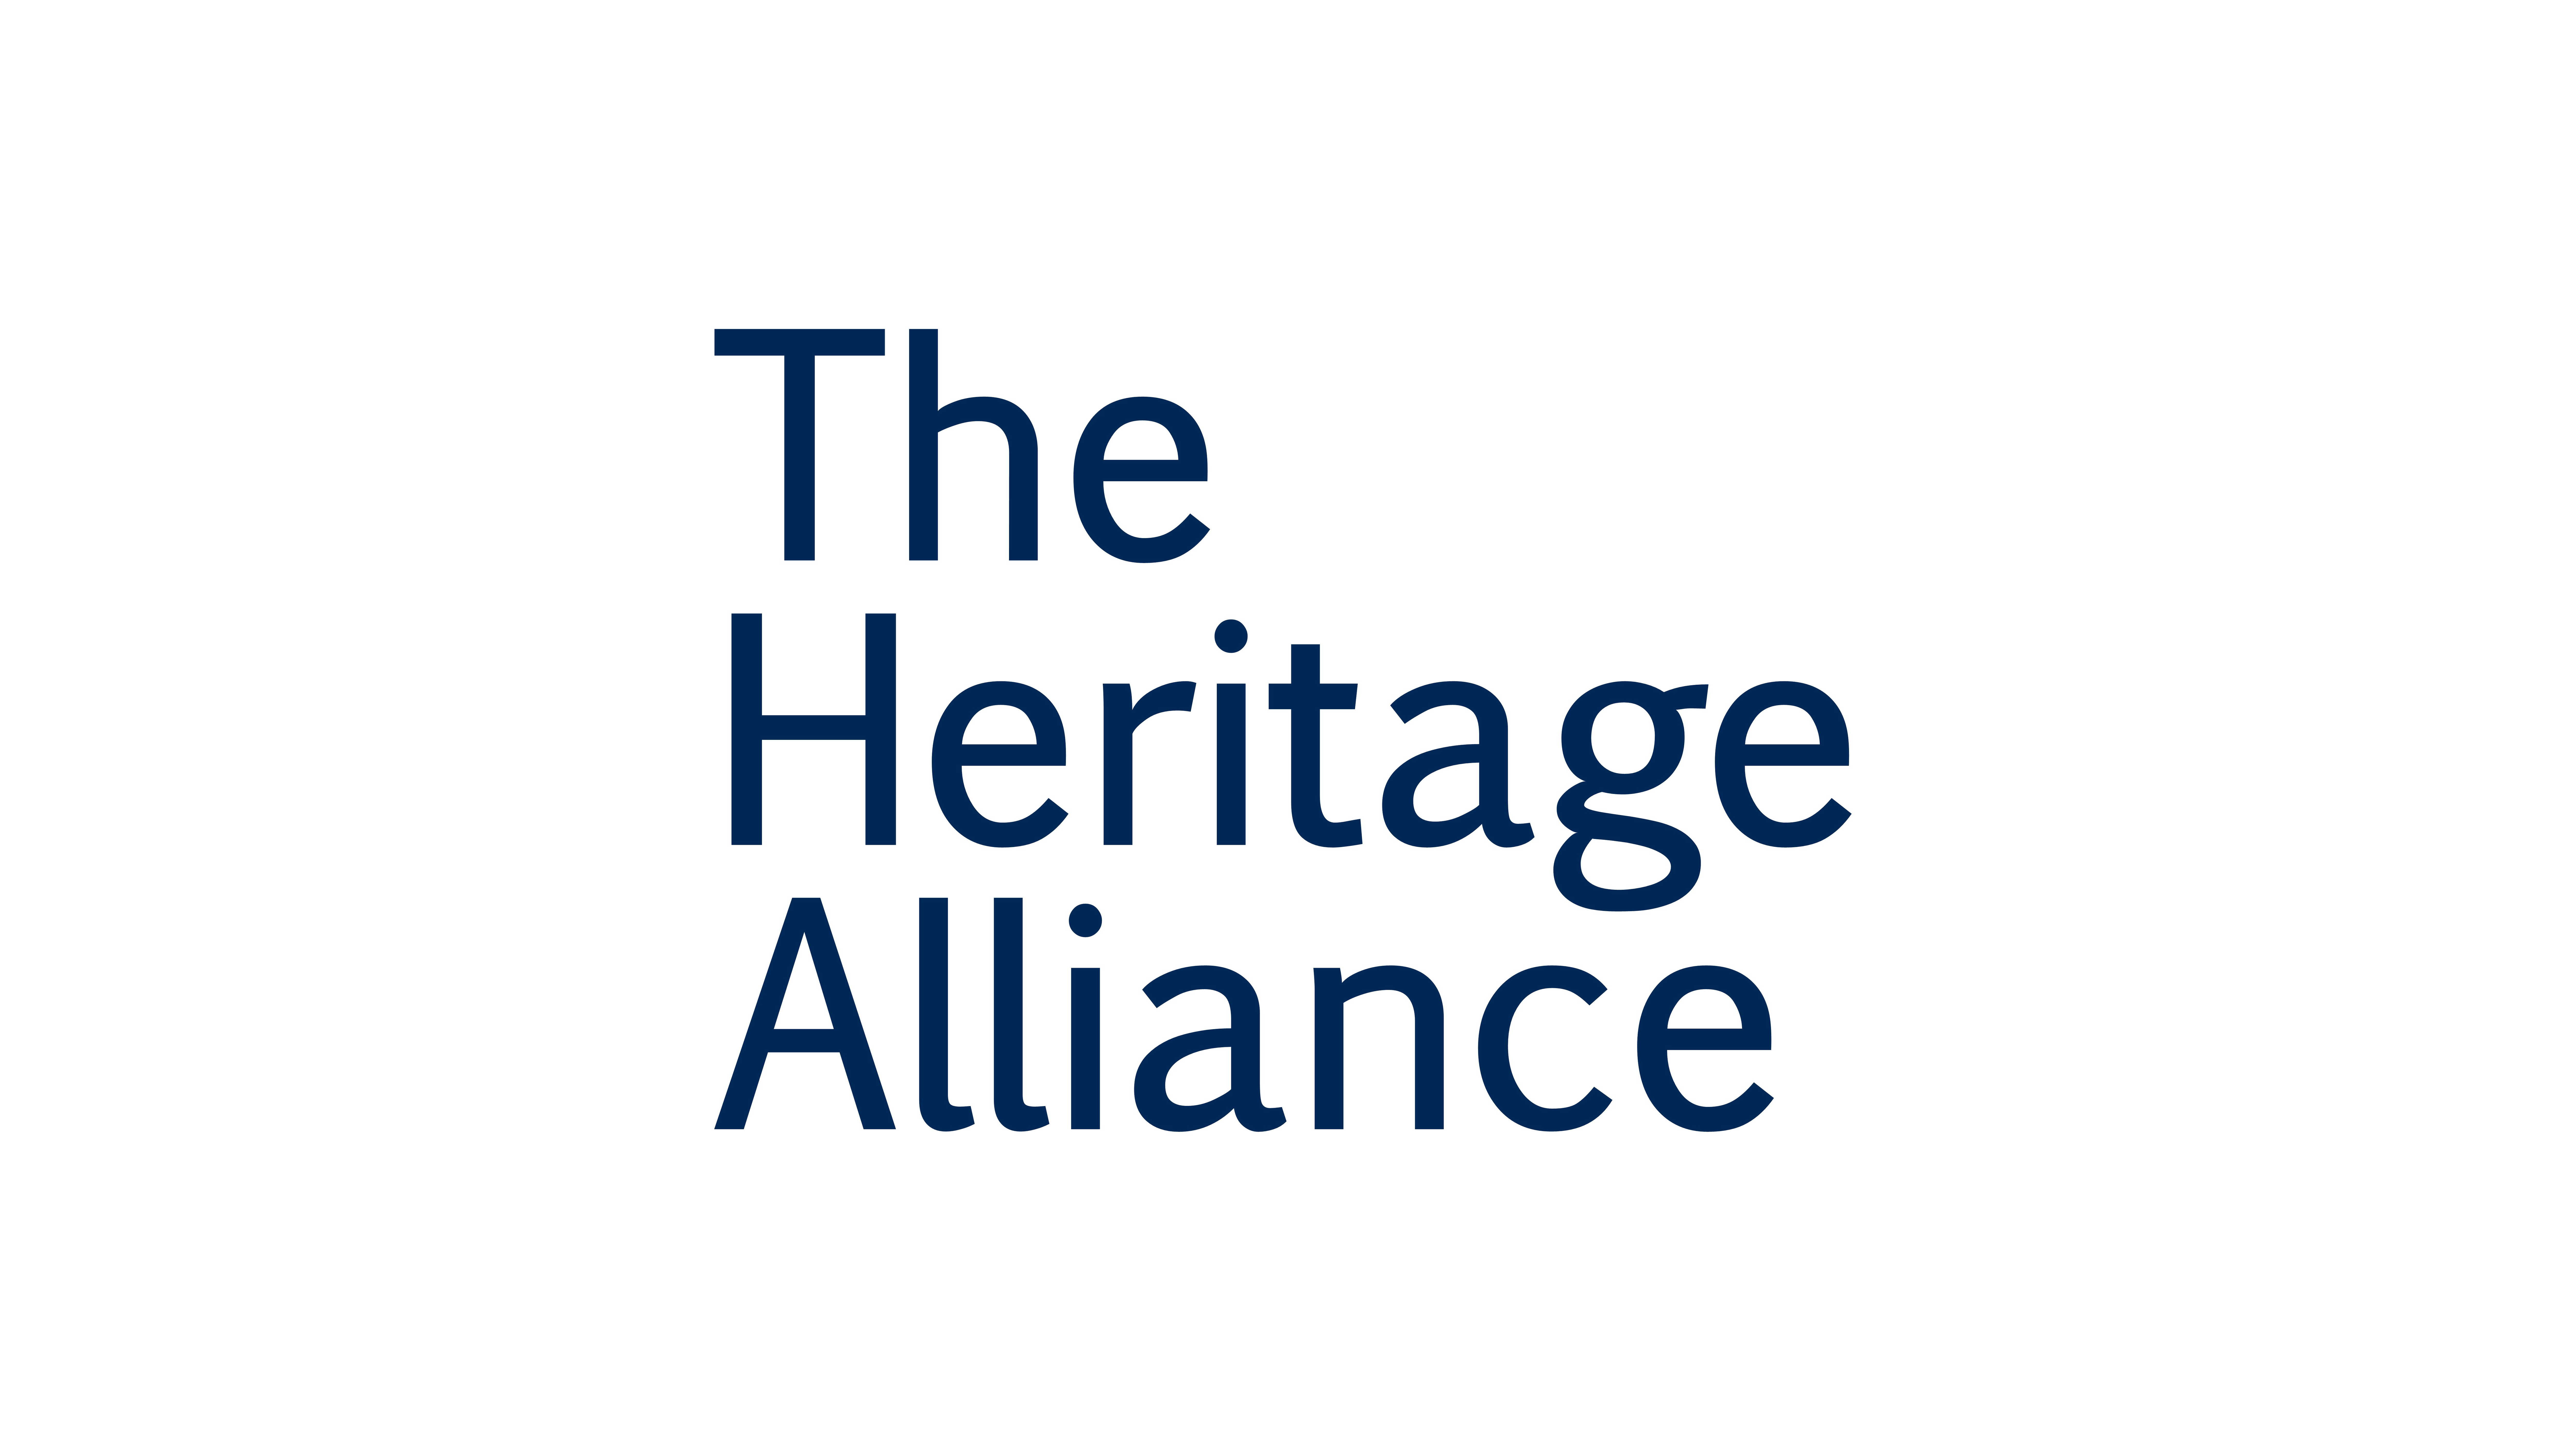 The Heritage Alliance logo